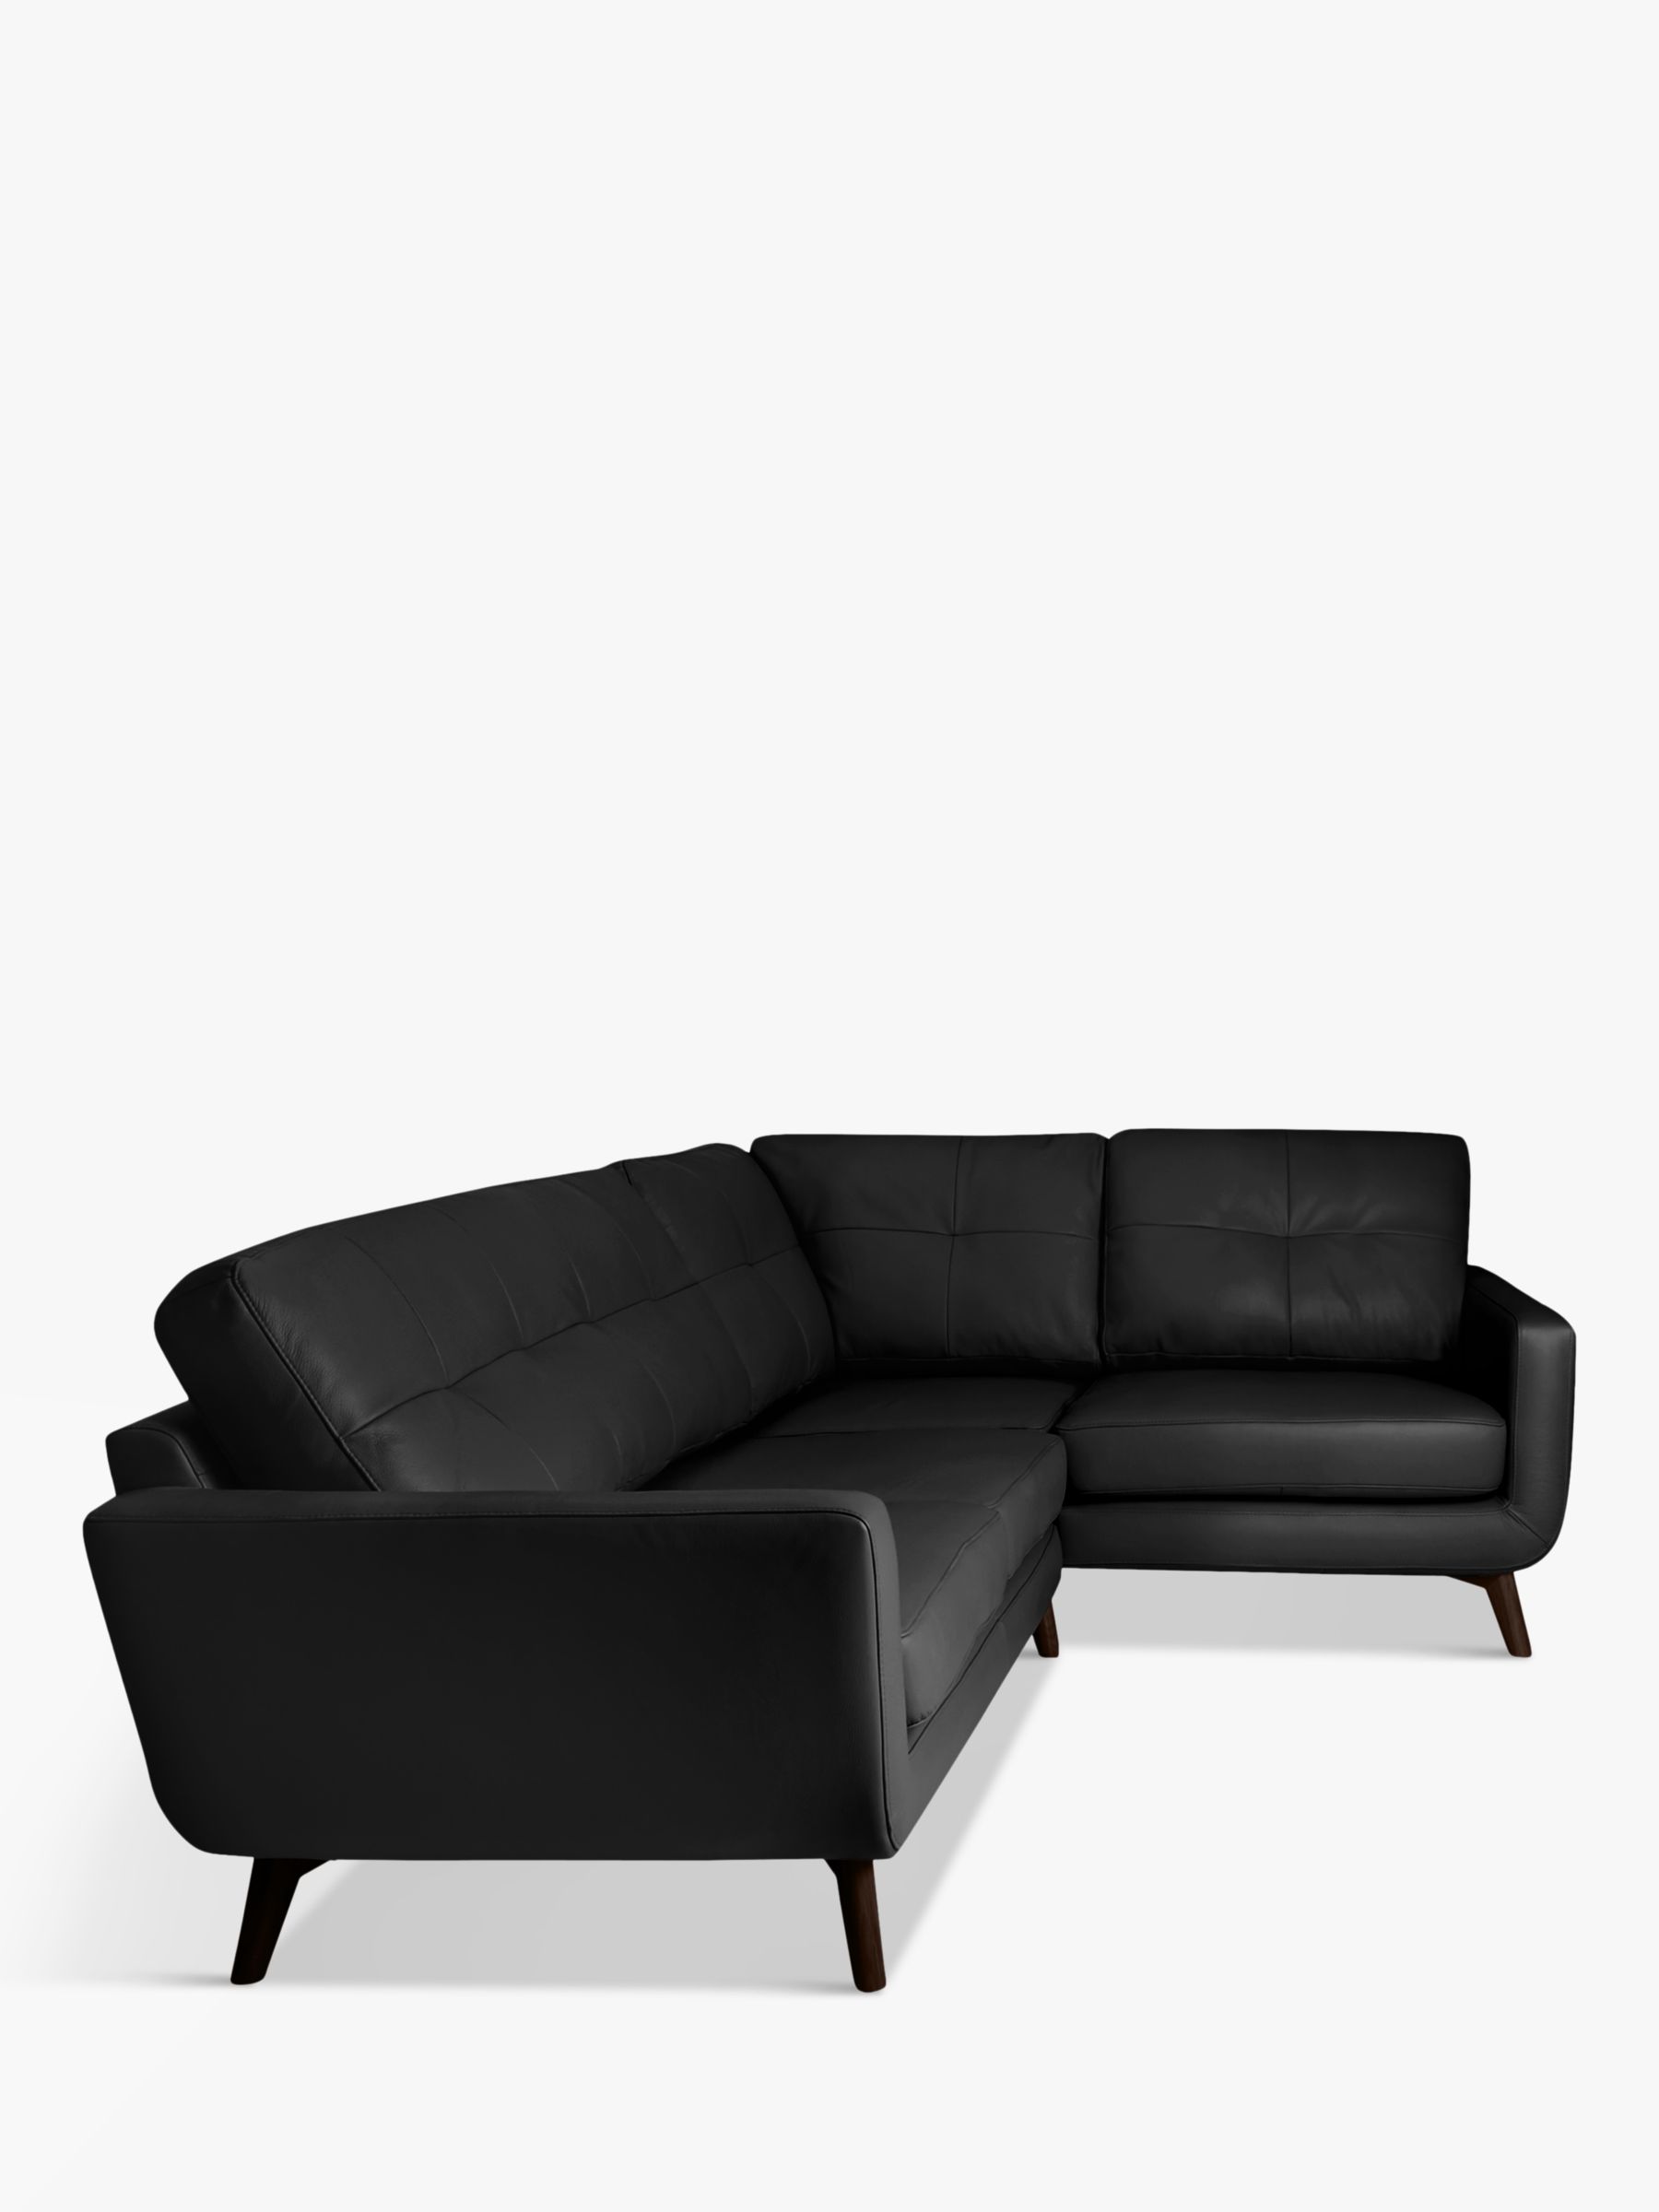 Barbican Range, John Lewis Barbican 4 Seater RHF Corner End Leather Sofa, Dark Leg, Contempo Black